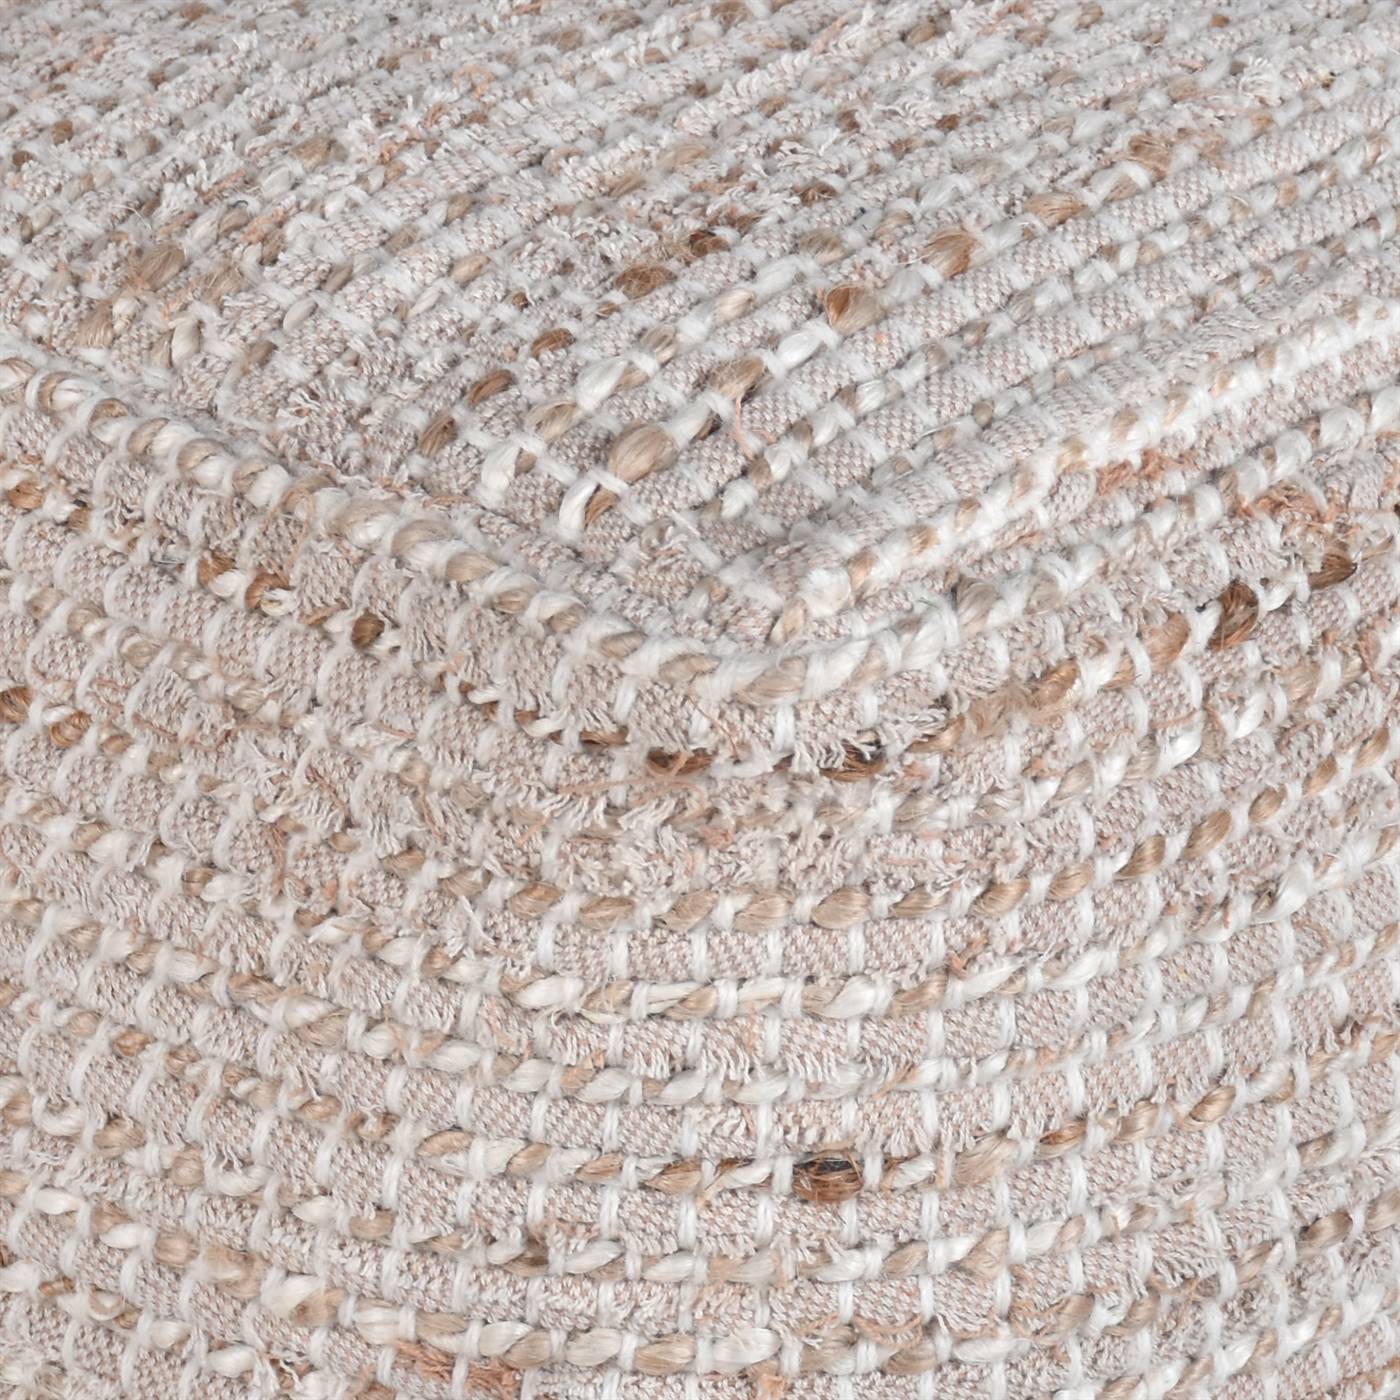 Koenig Pouf, 40x40x40 cm, Natural Natural White, Multi, Jute, Cotton, Hand Woven, Pitloom, Flat Weave